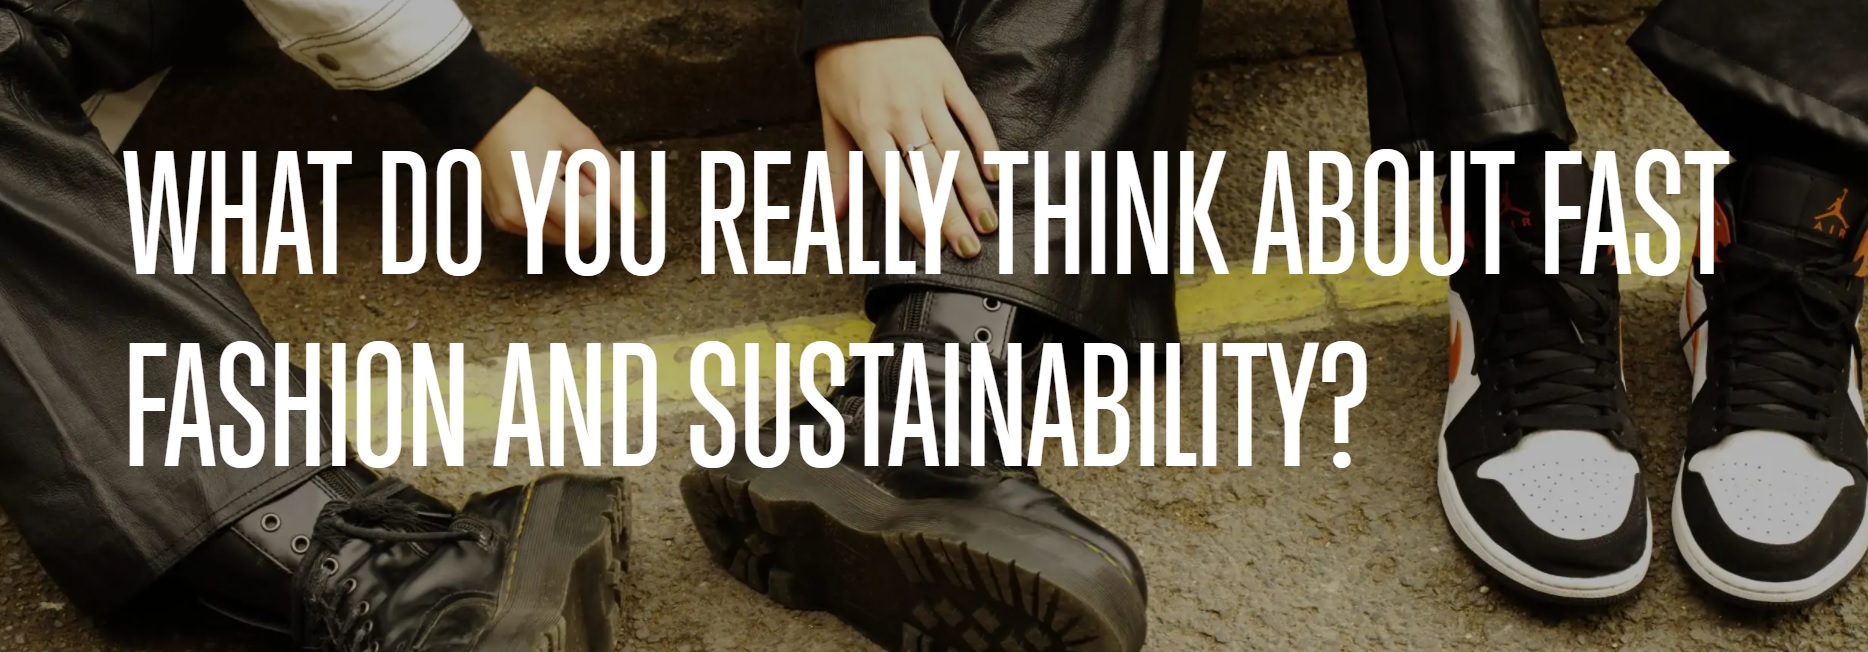 fashion and sustainability leather